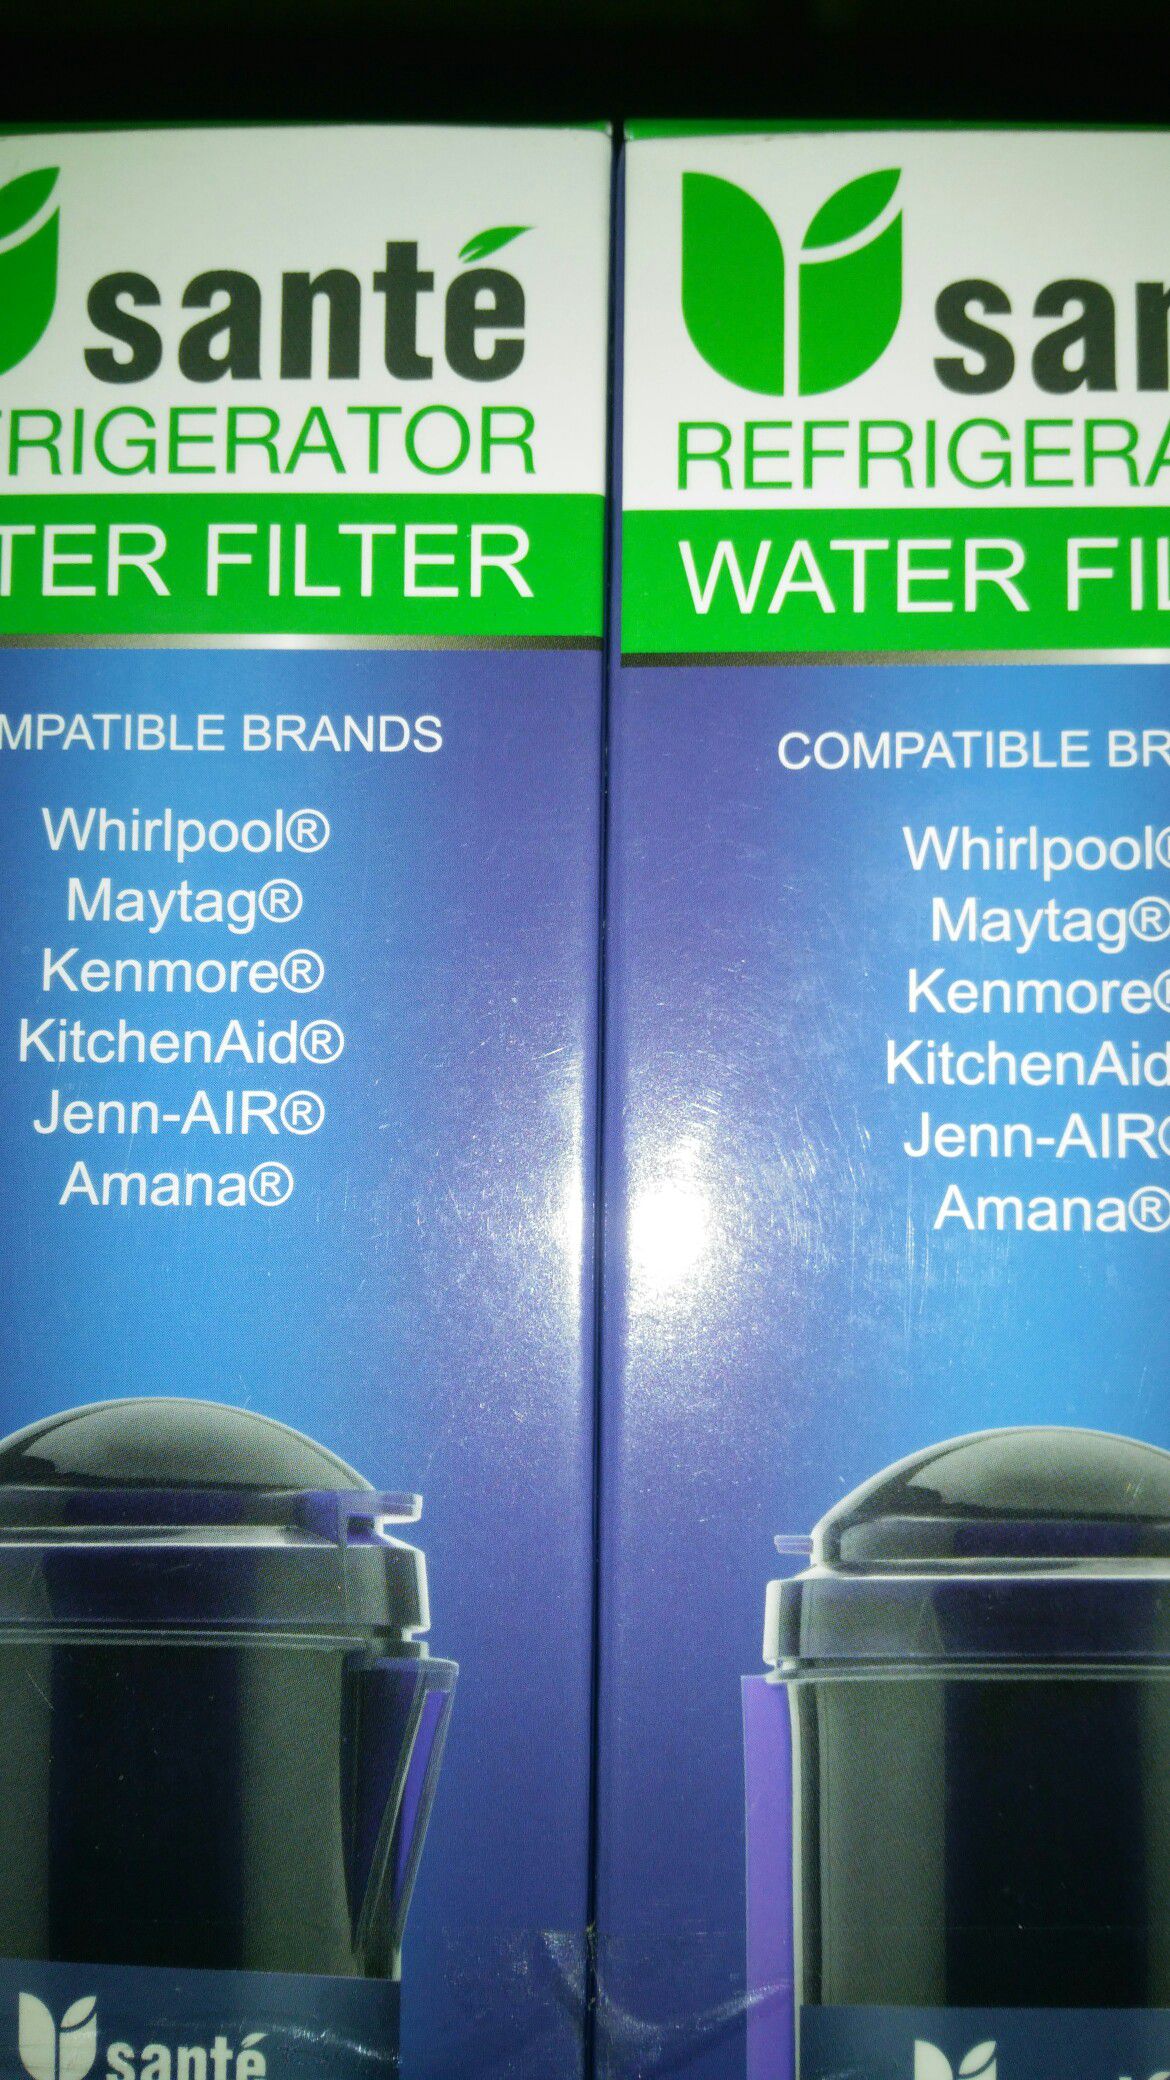 Sante Refrigerator water filters